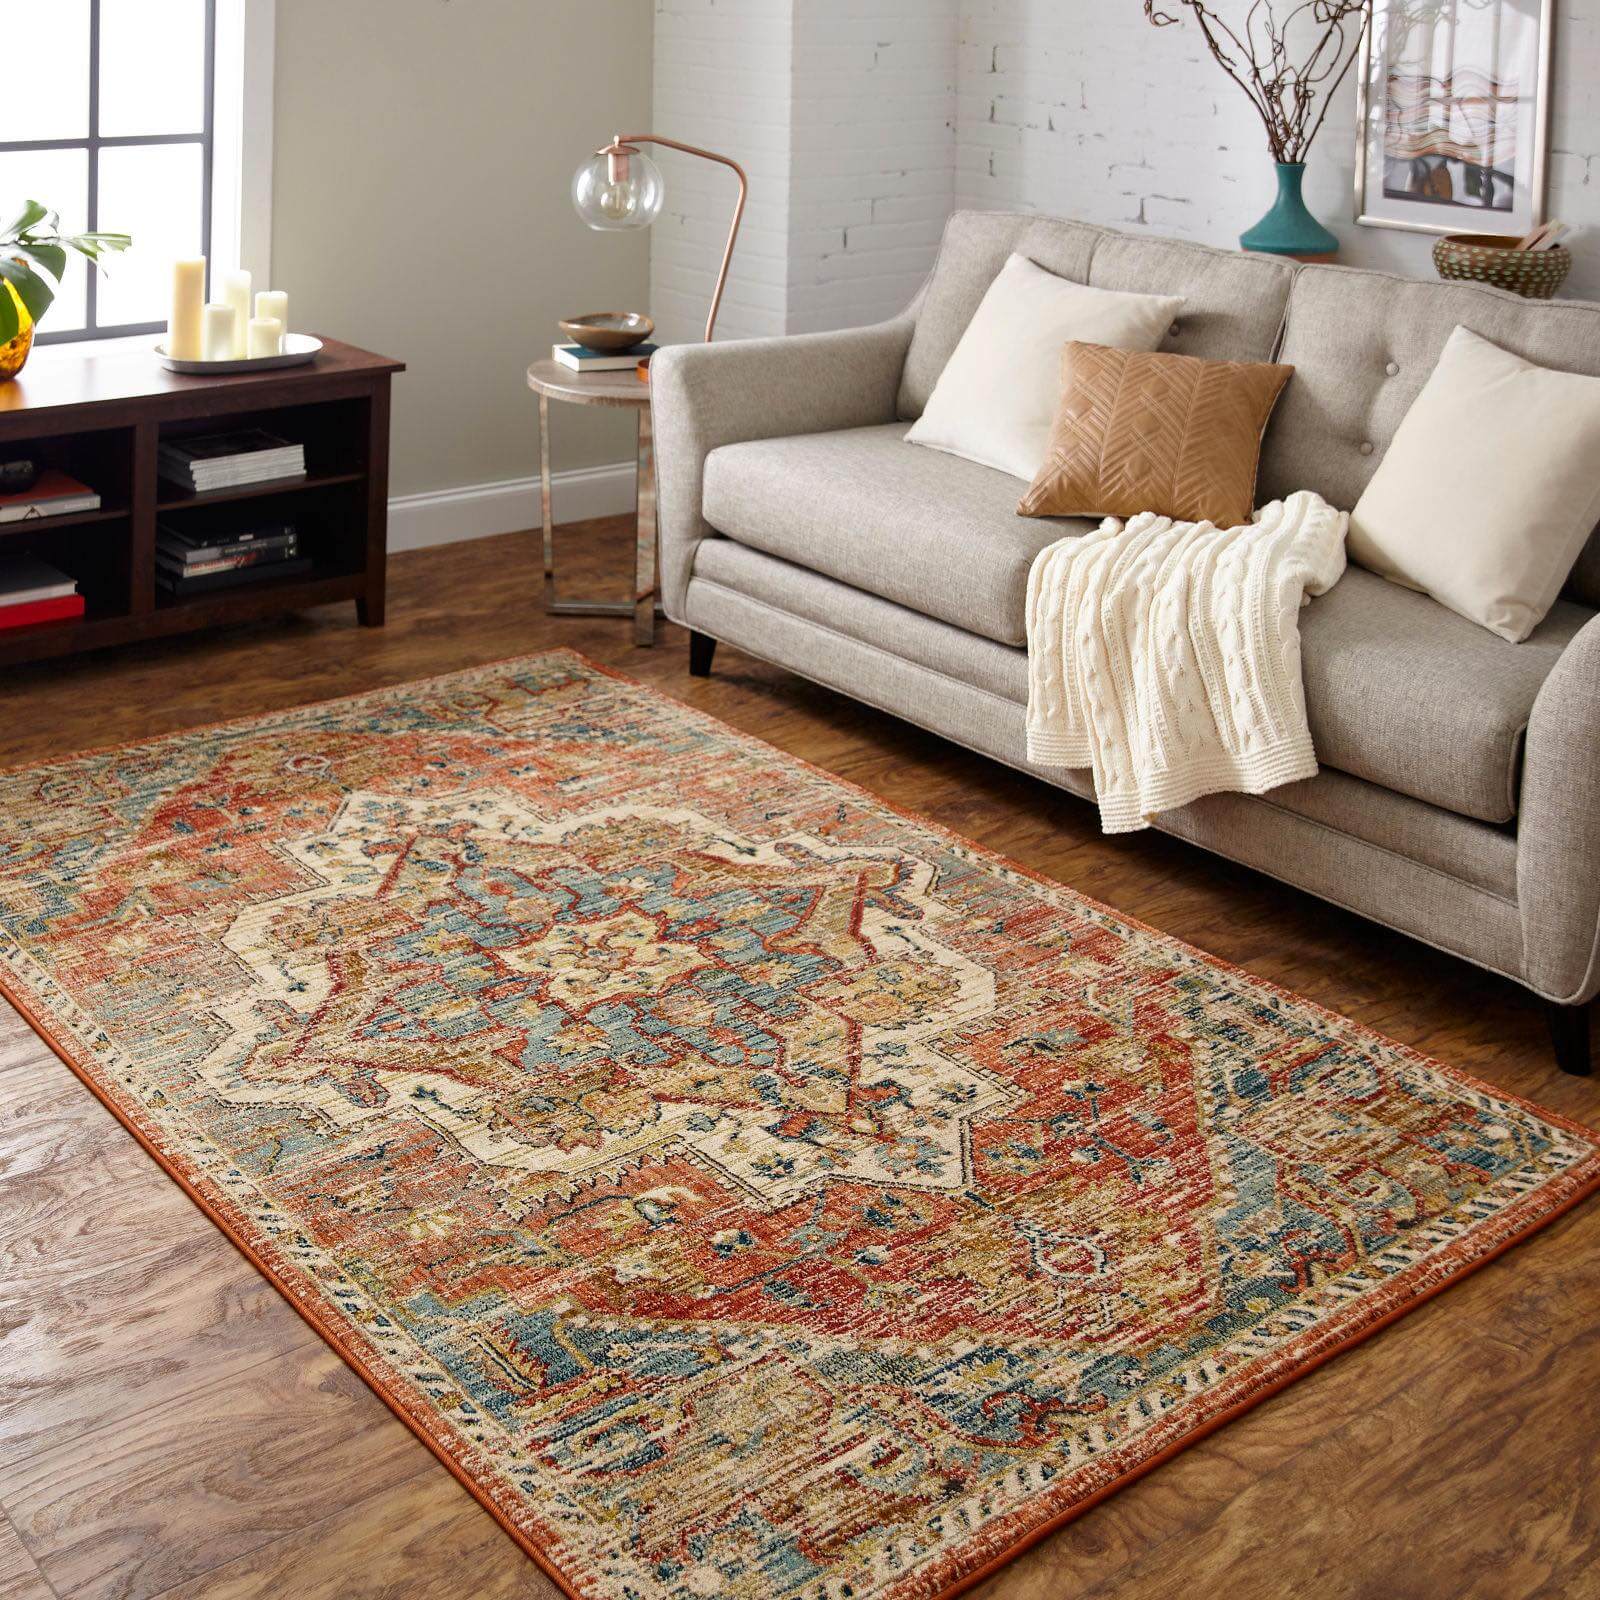 area rug in living room | Sackett's Flooring Solutions